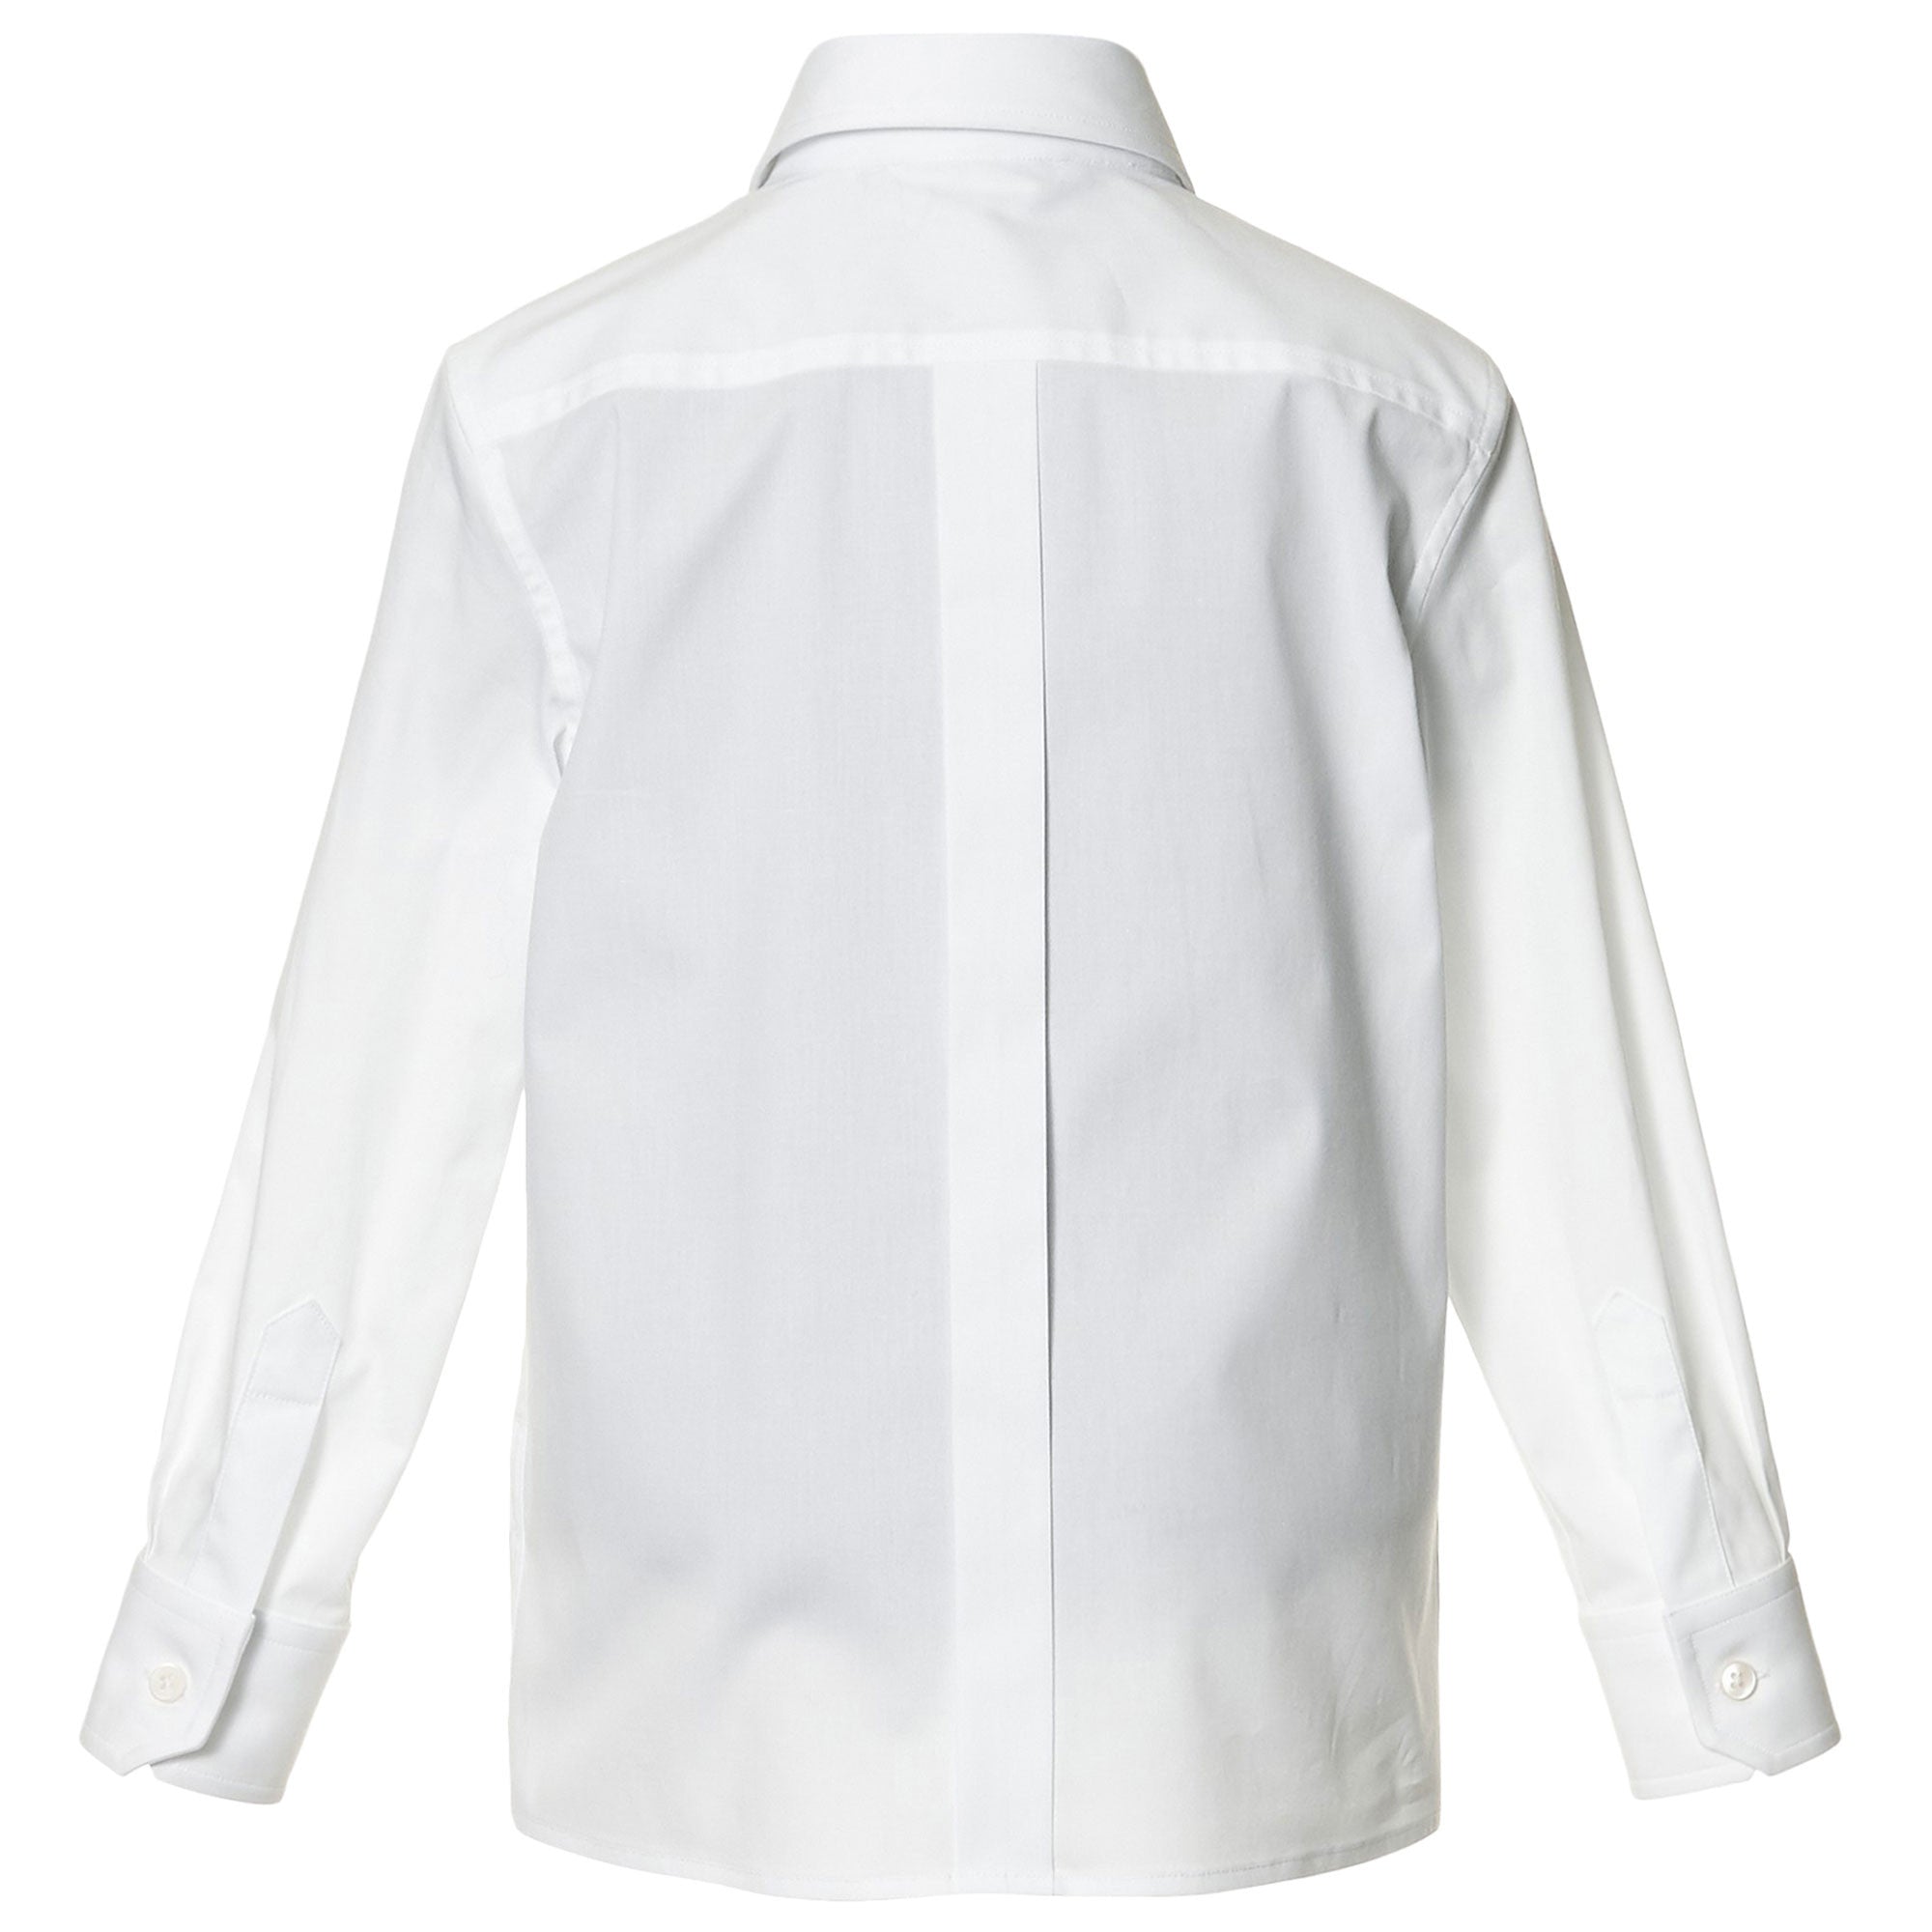 Boys White Cotton Jersey Long Sleeved Shirt - CÉMAROSE | Children's Fashion Store - 2